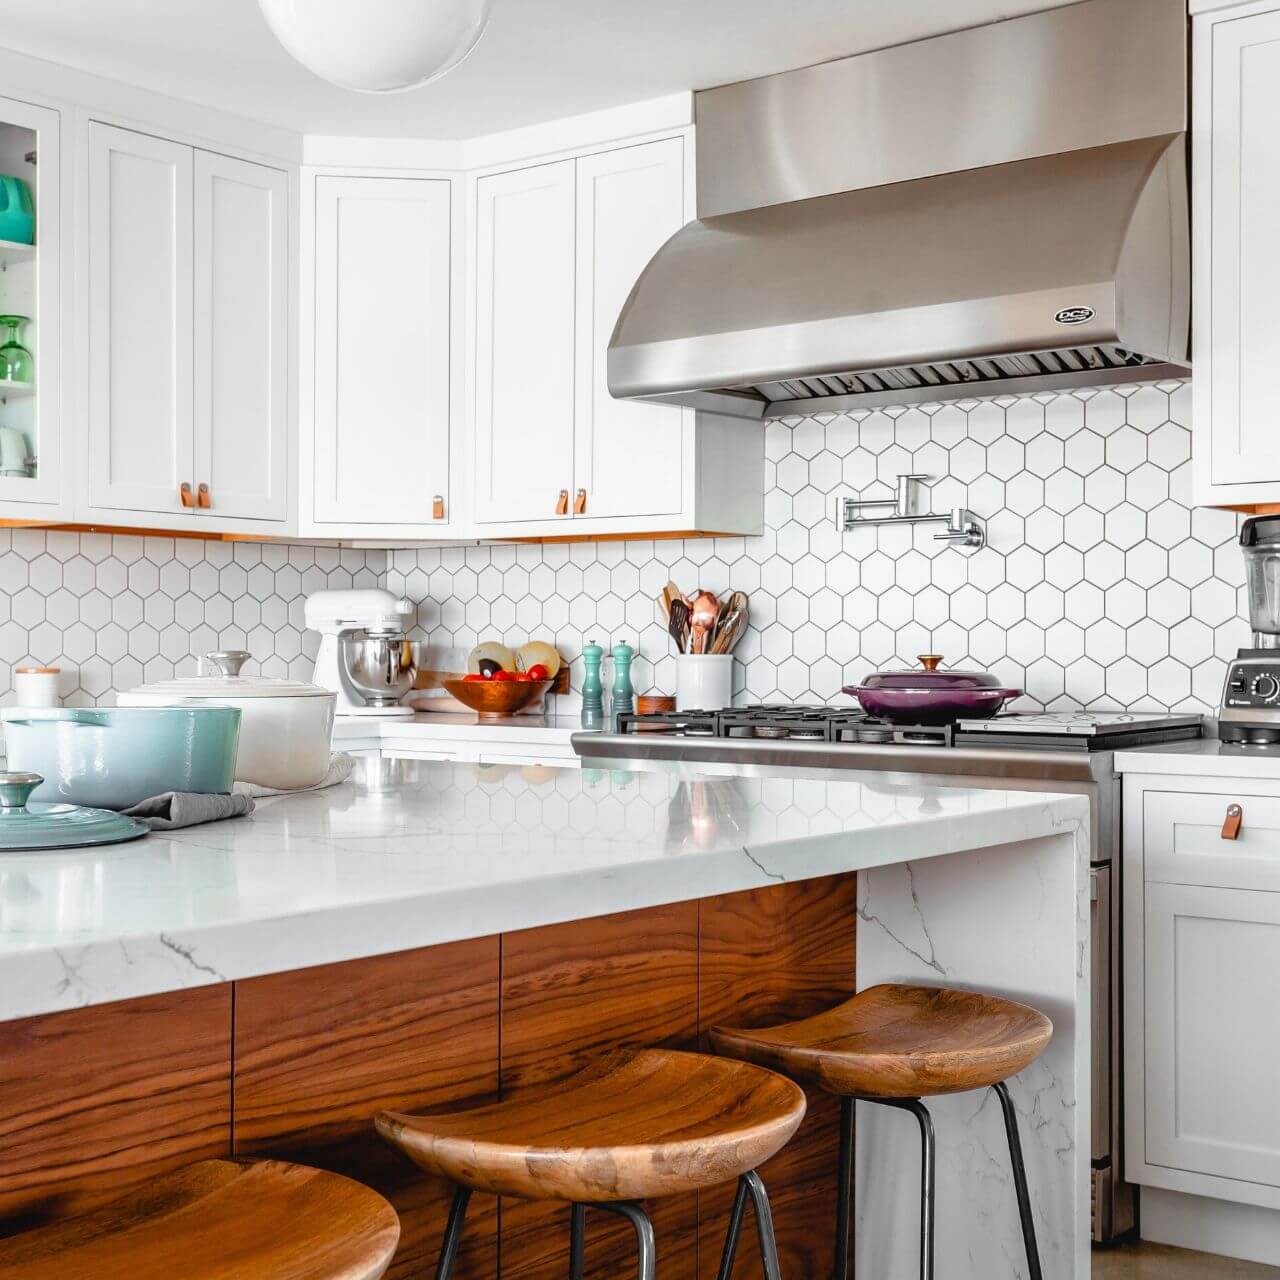 Bright modern kitchen with white tiles